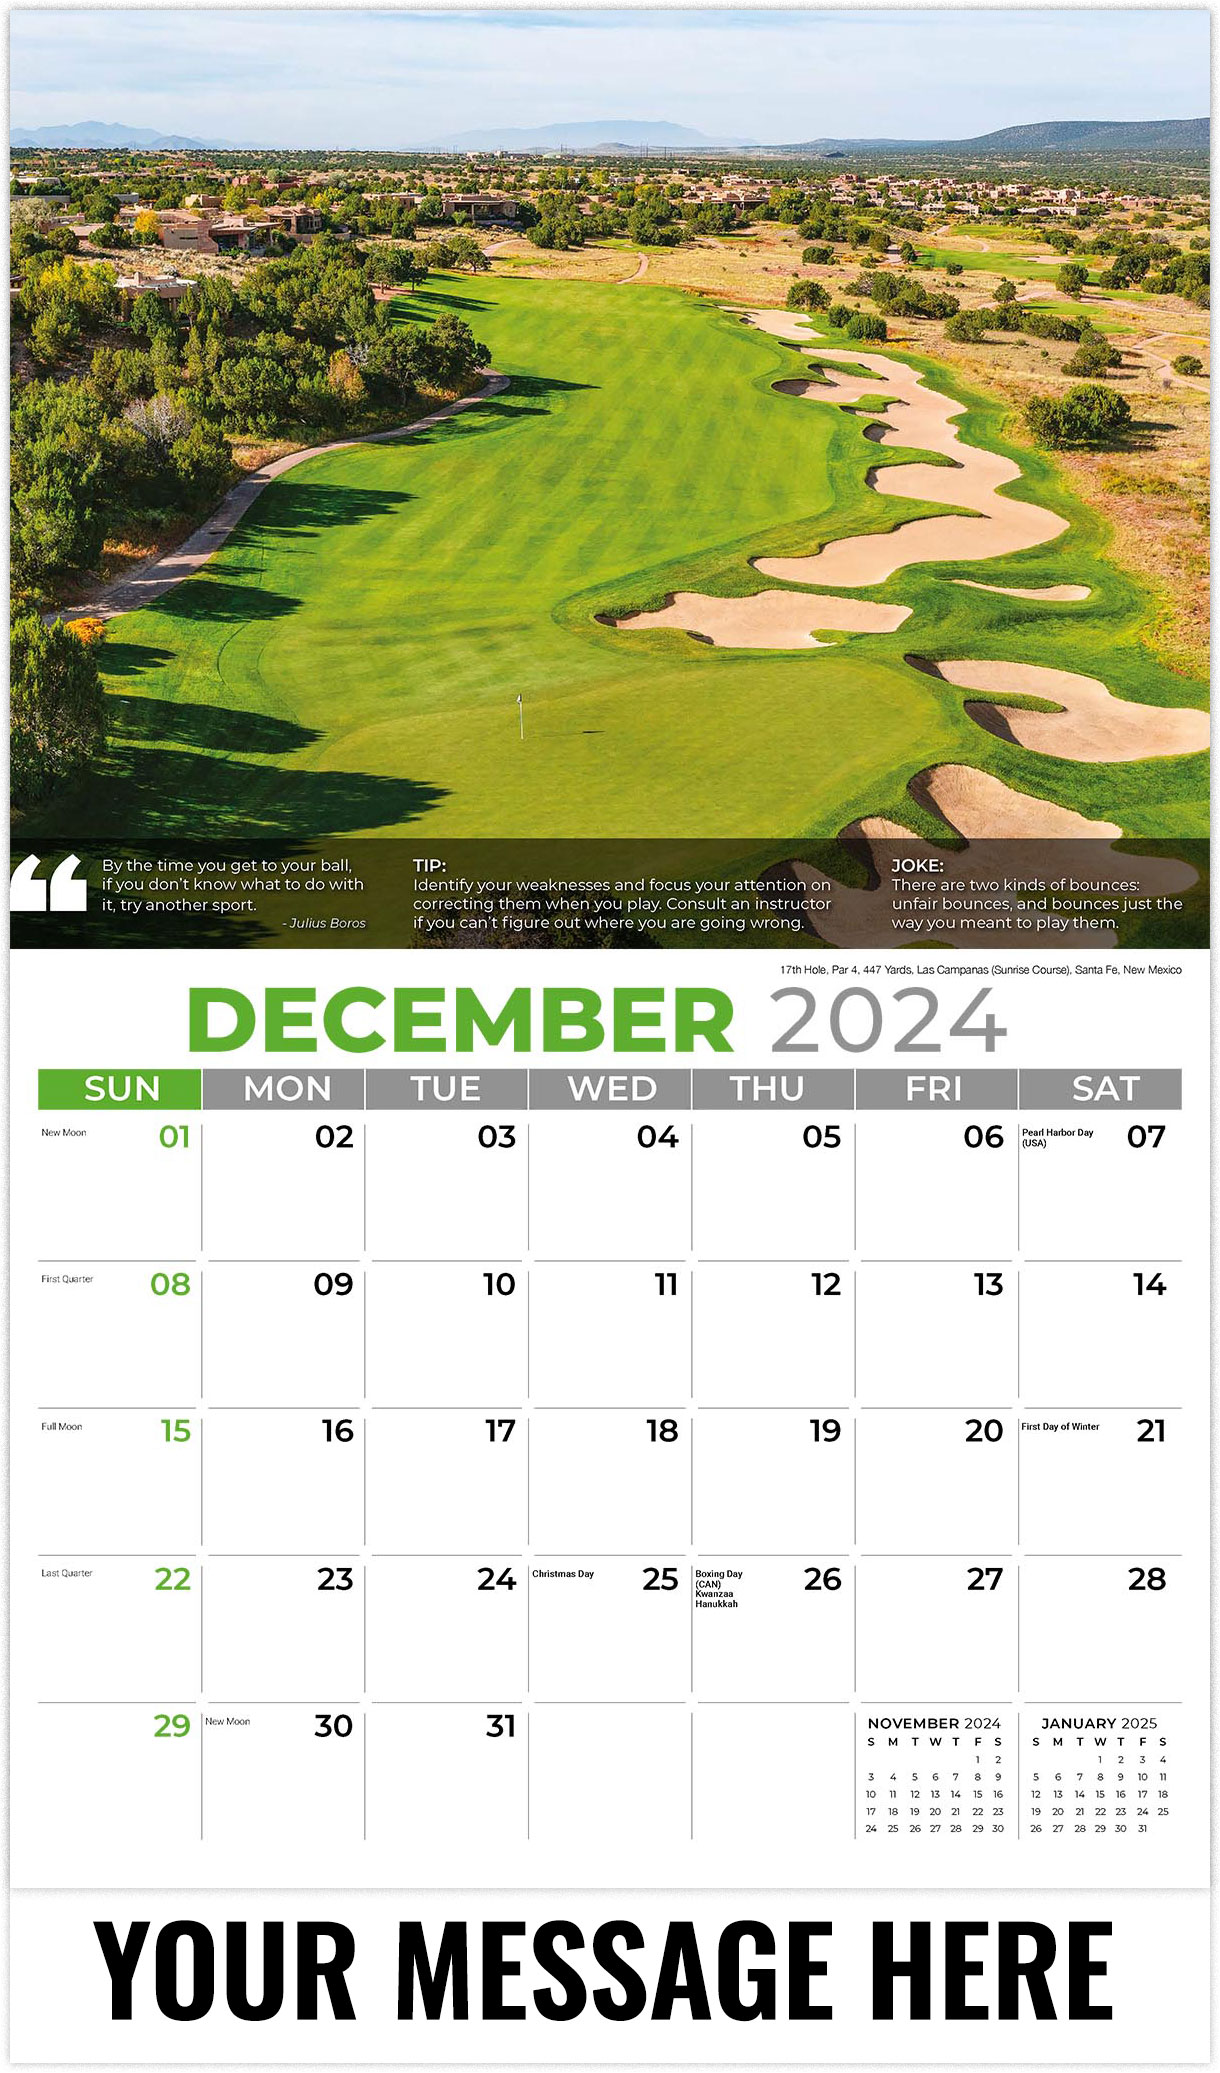 Galleria Golf Tips - 2025